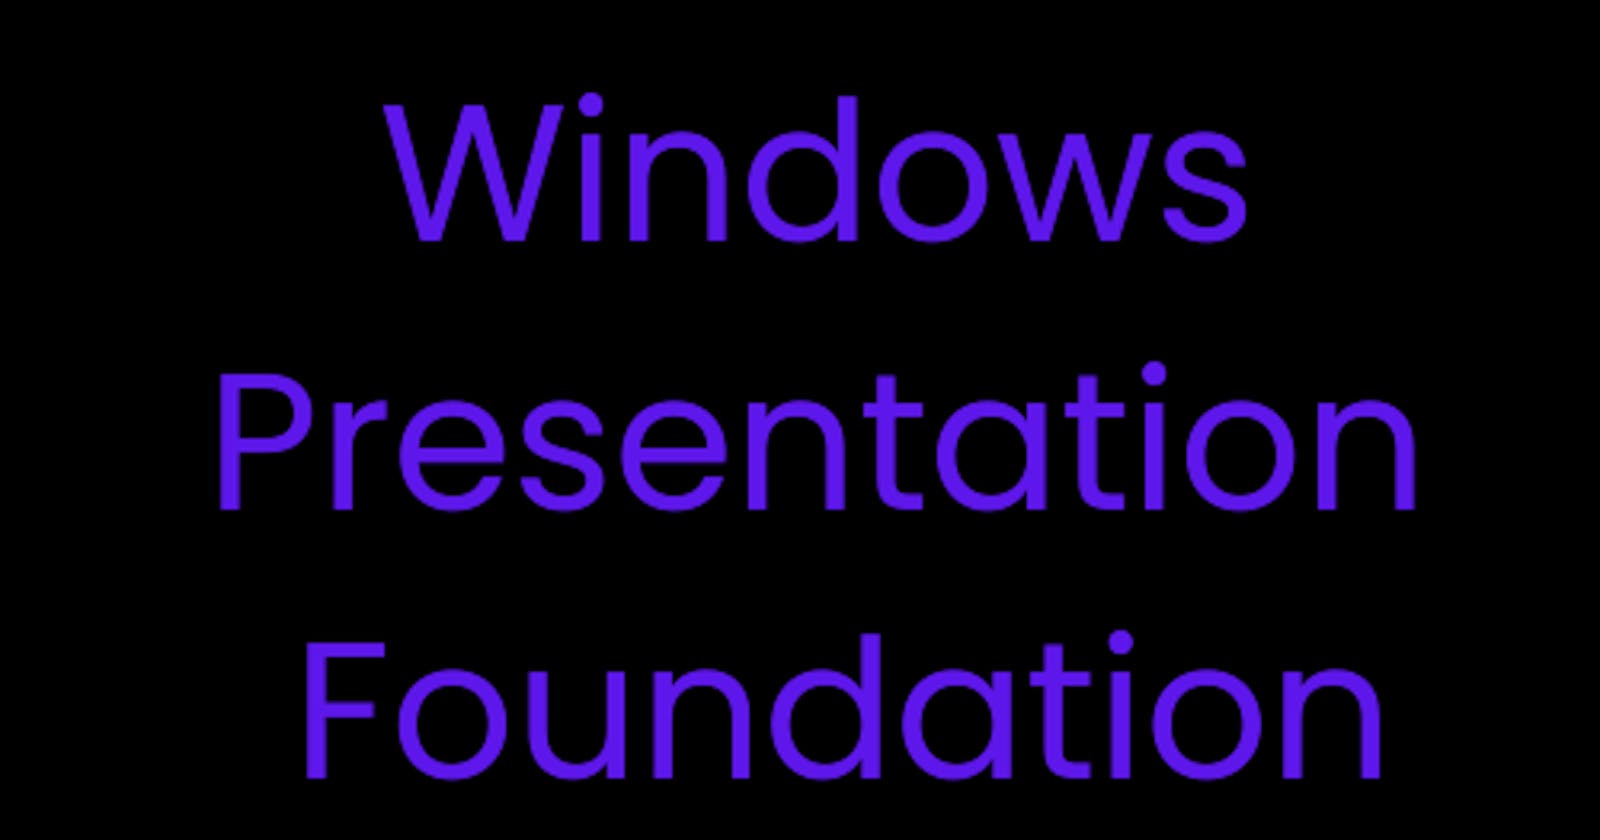 What is WPF (Windows Presentation Foundation)?